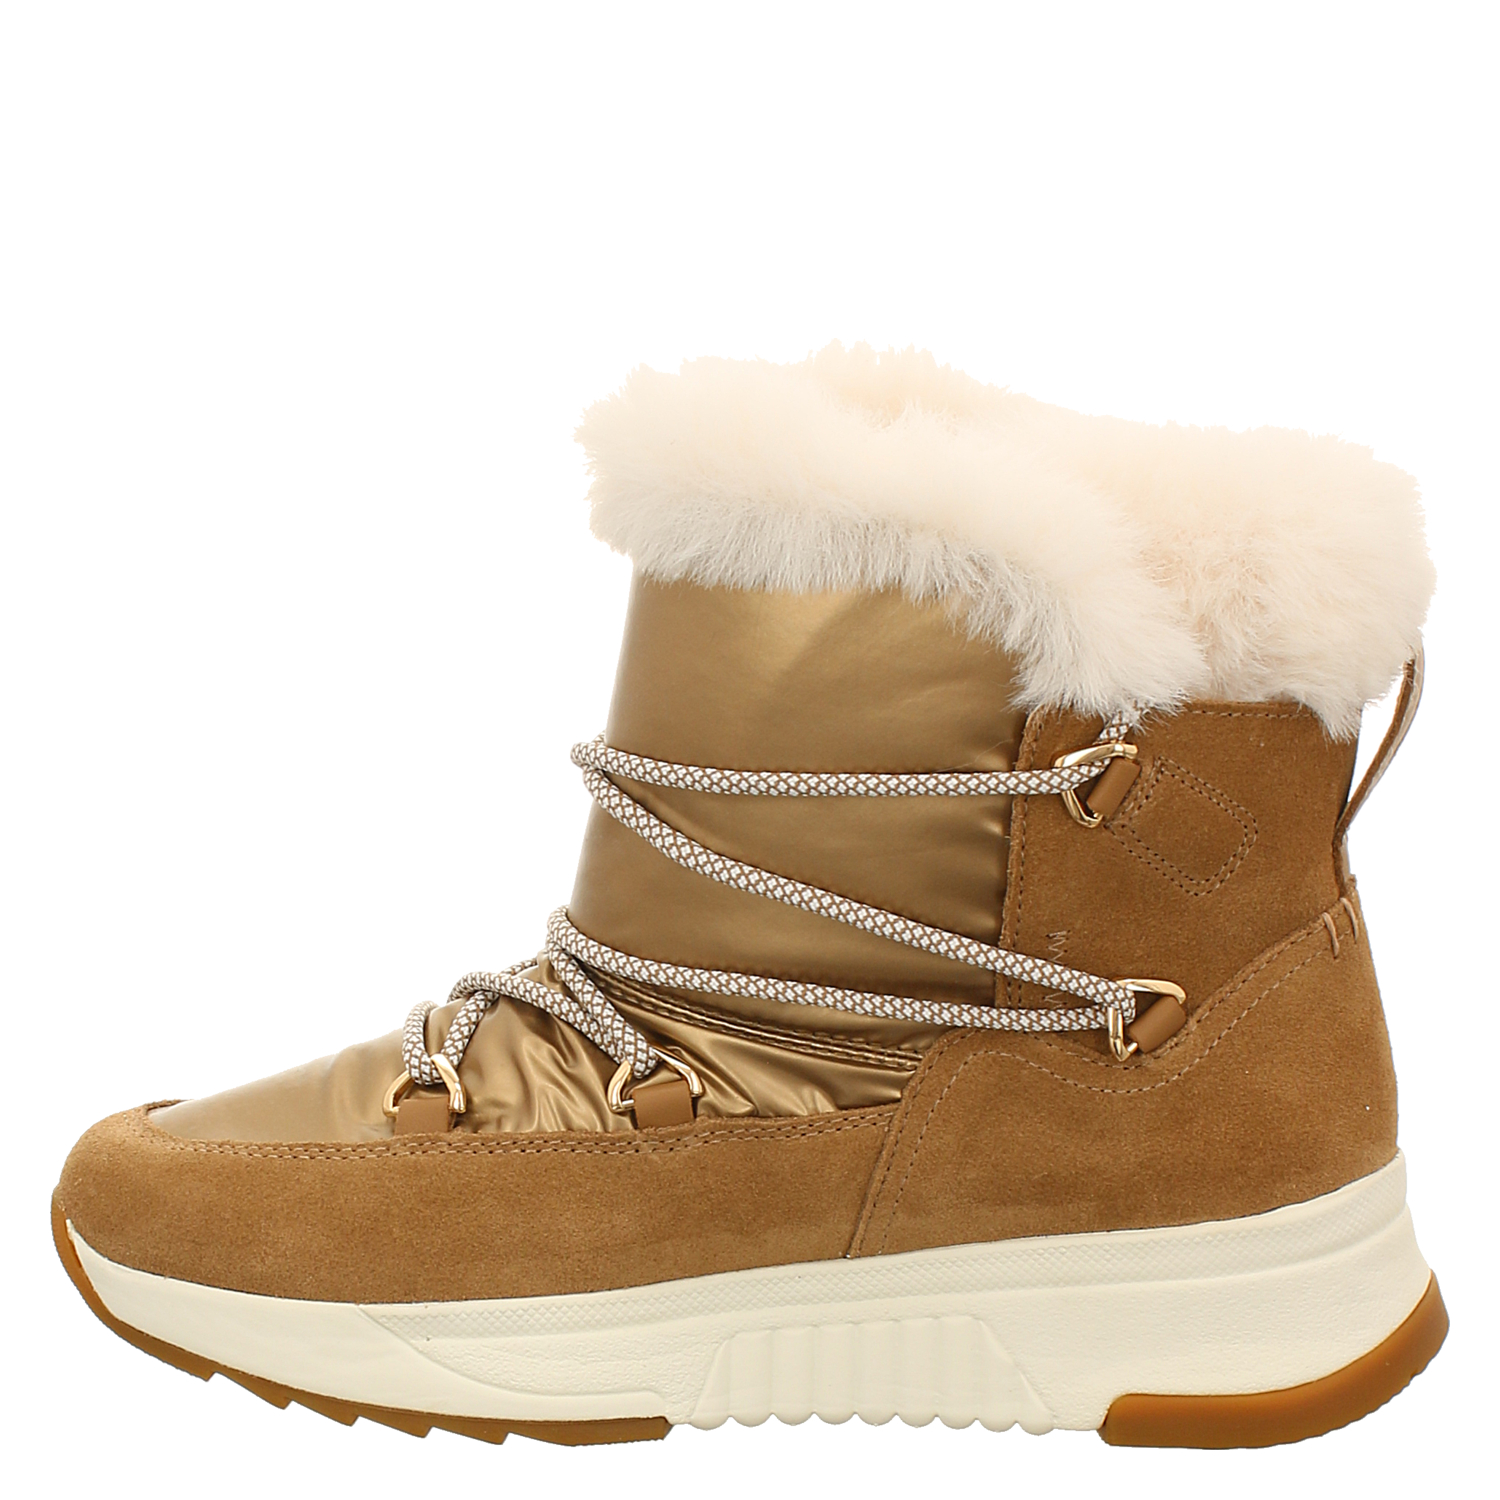 Damen Stiefeletten Winter Boots Warm Gefütterte Winterstiefel 898669 Top